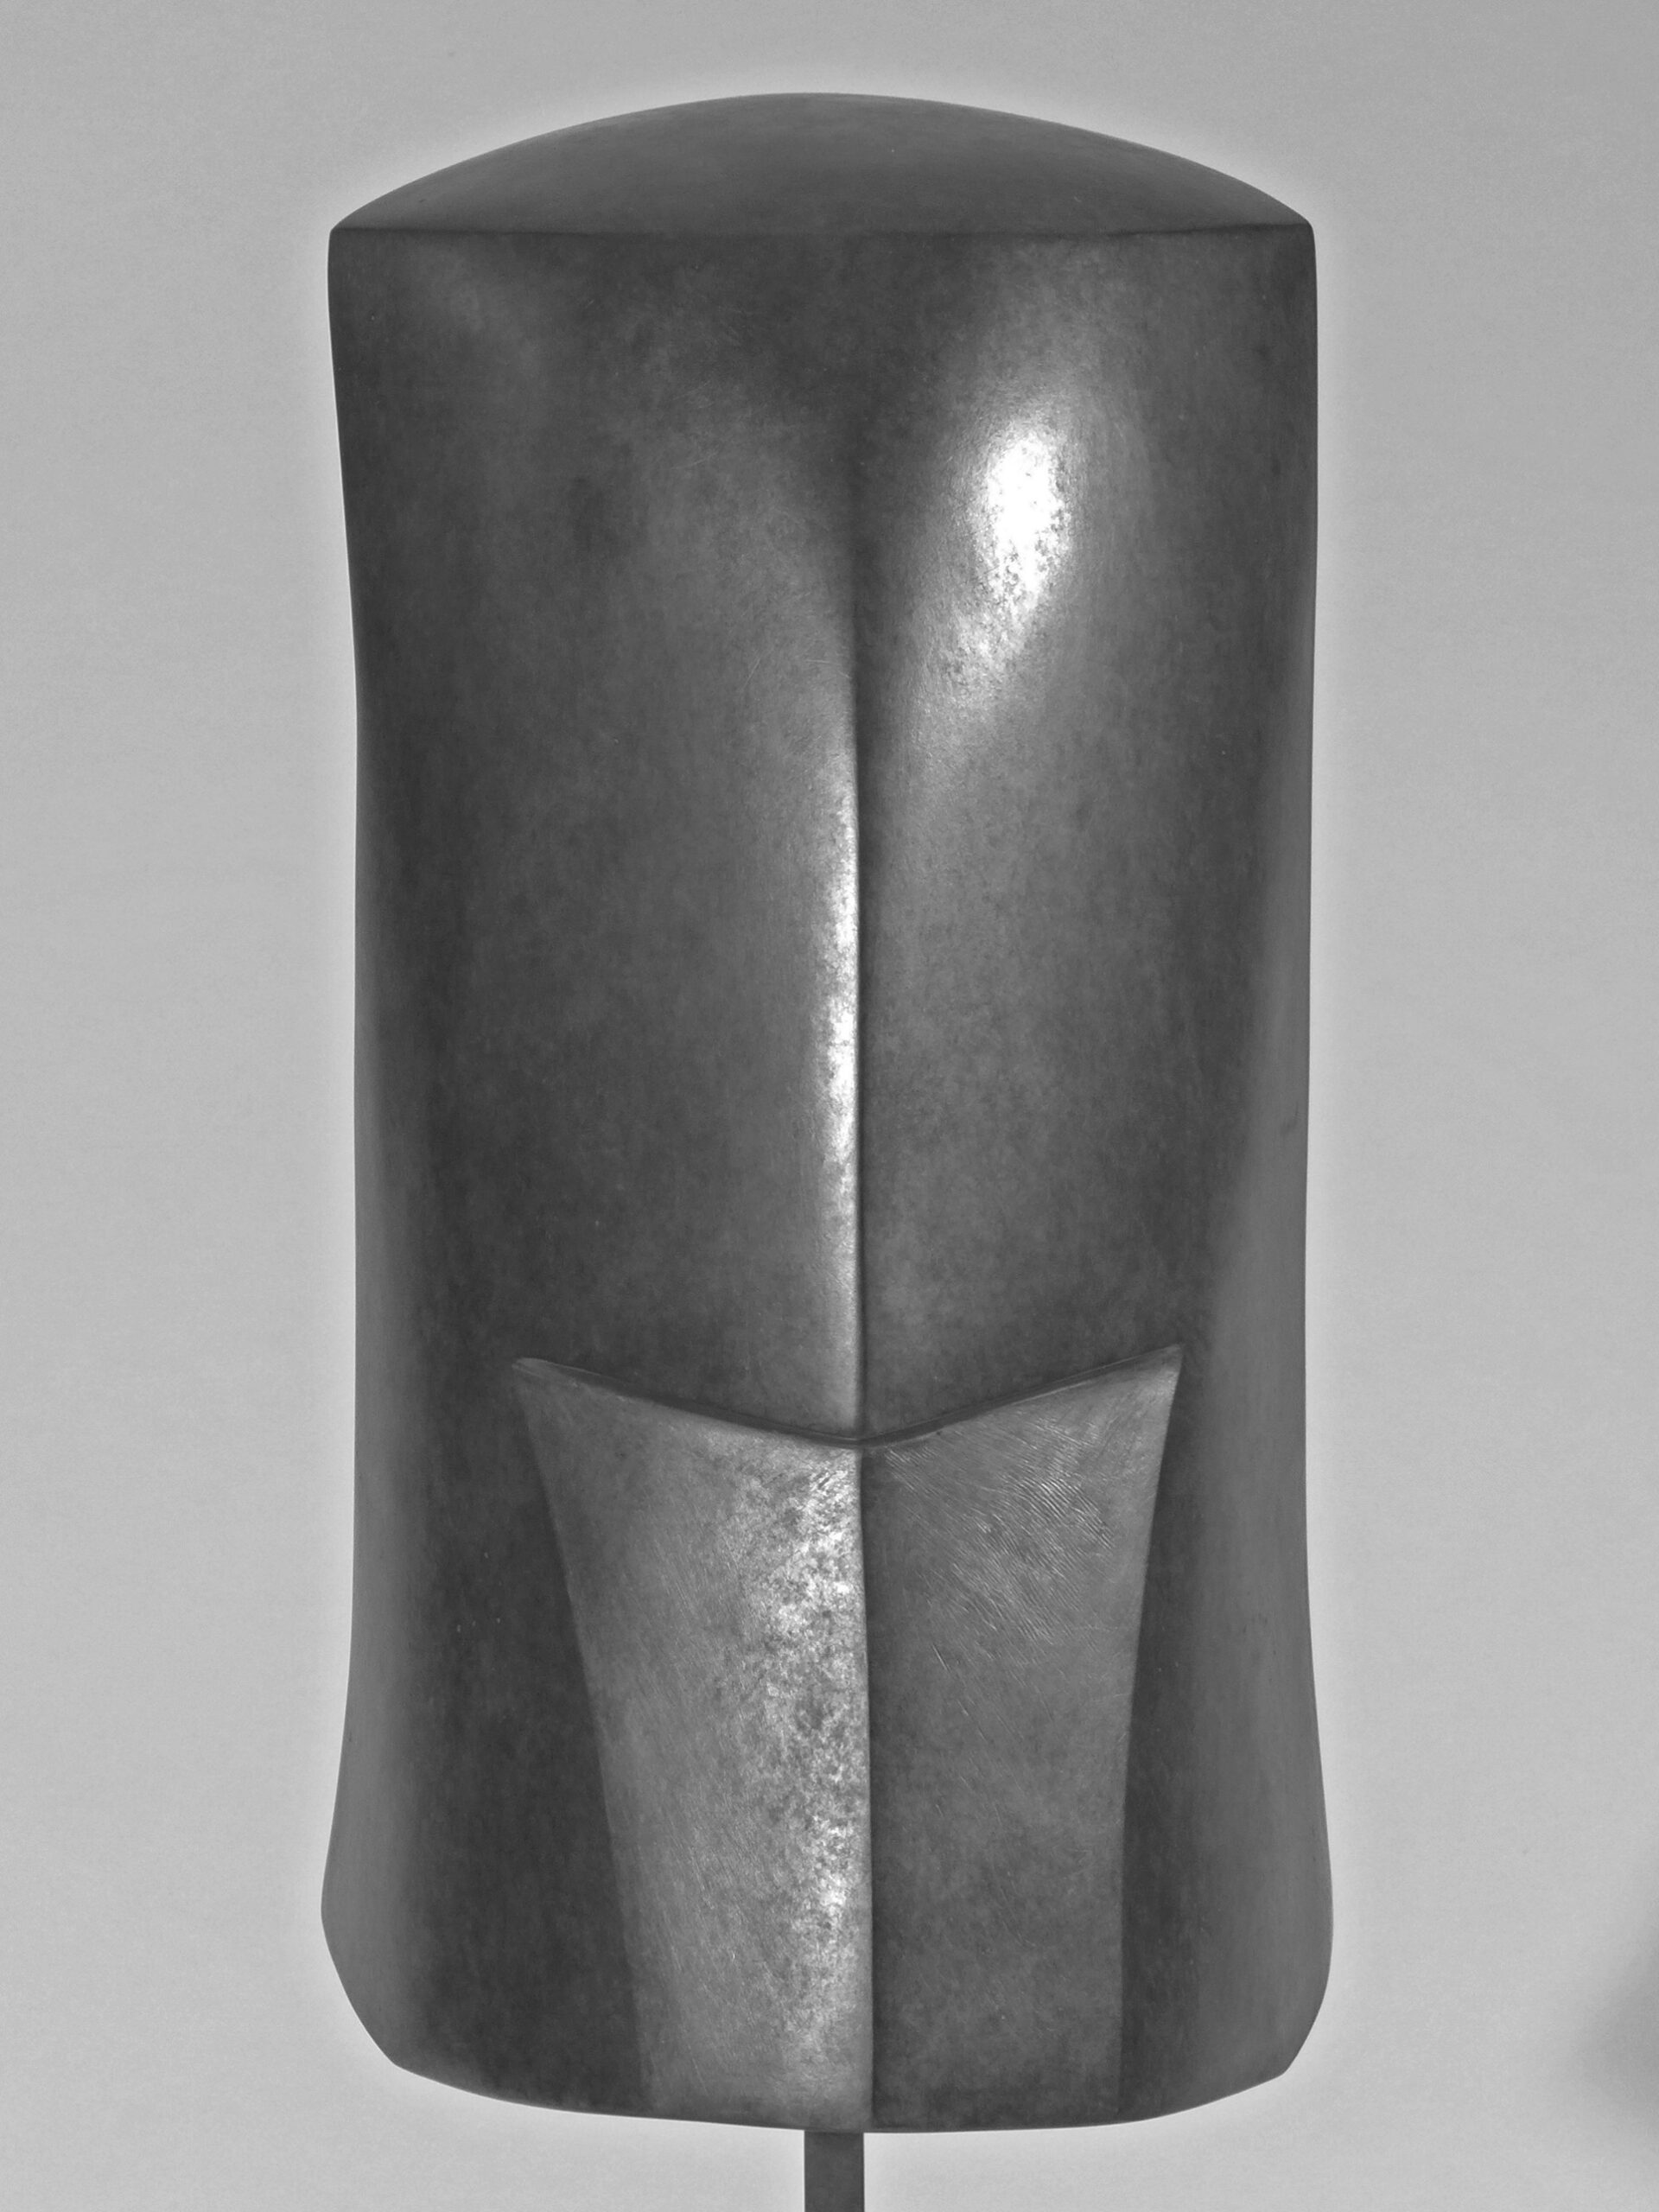 12 La Paresse, 1986, bronze, h 66,5 cm